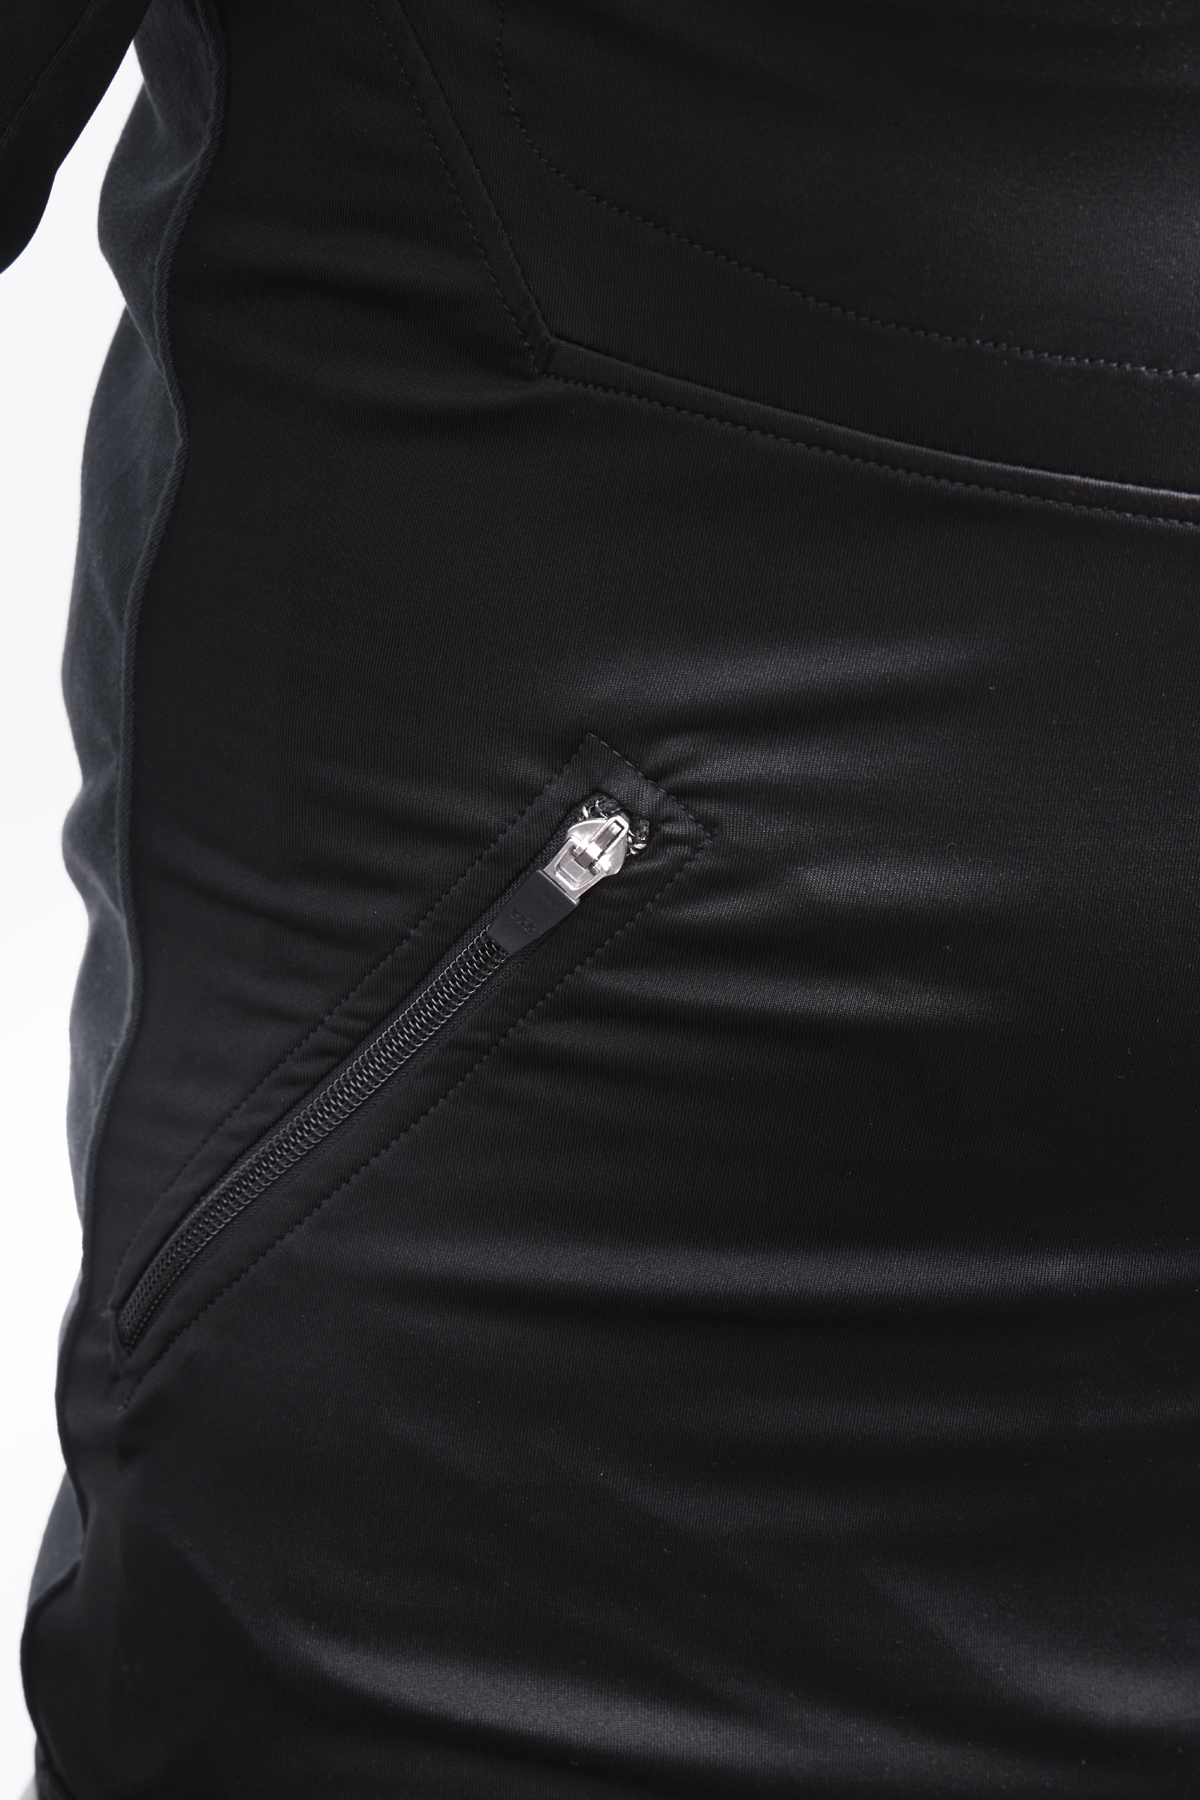 BOWTEX Standard R Shirt CE Level AA Black - Technical underwear